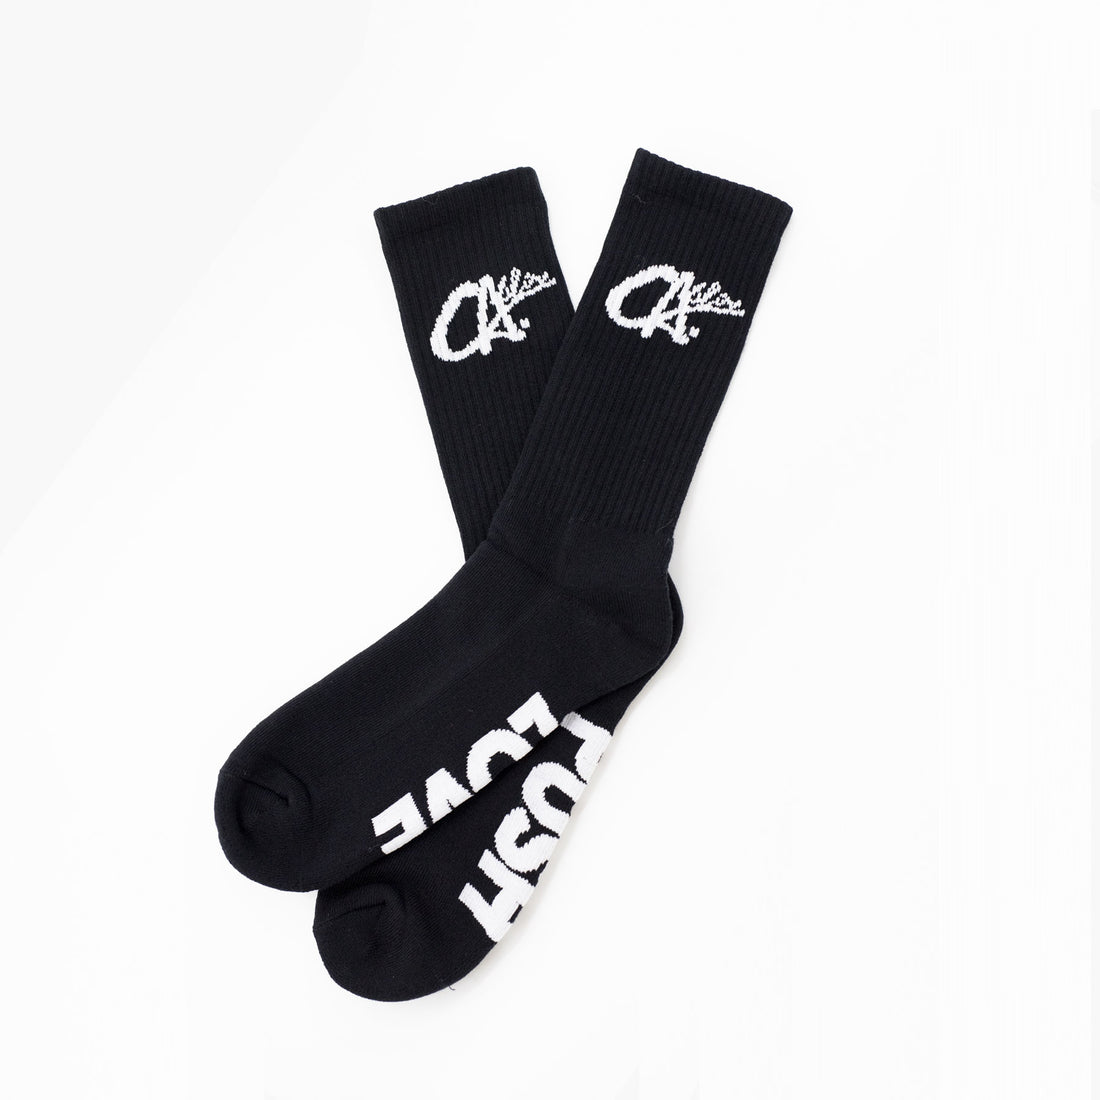 Logo Socks by Calibis Clothing